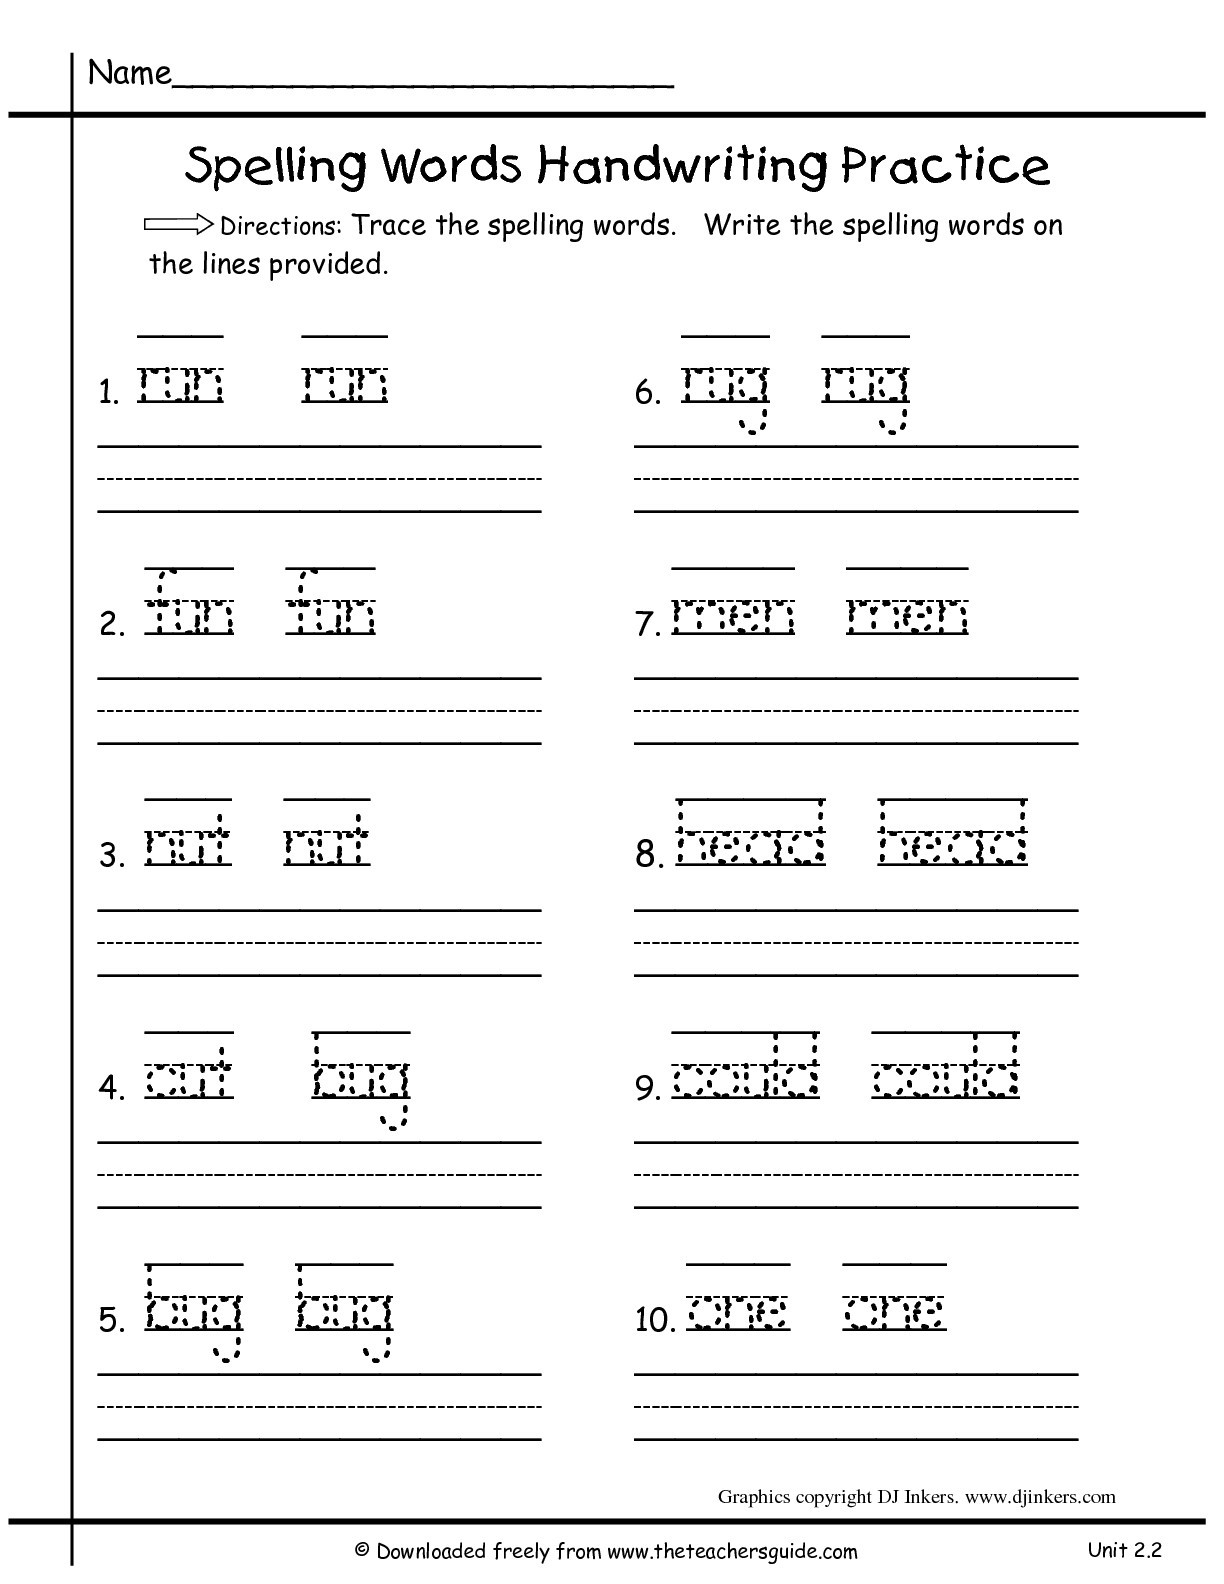 Writing Sheets for 1st Graders Spelling Exercises for 1st Grade ÙÙ ÙØ³Ø¨Ù ÙÙ ÙØ ÙÙ Ø§ÙØµÙØ±